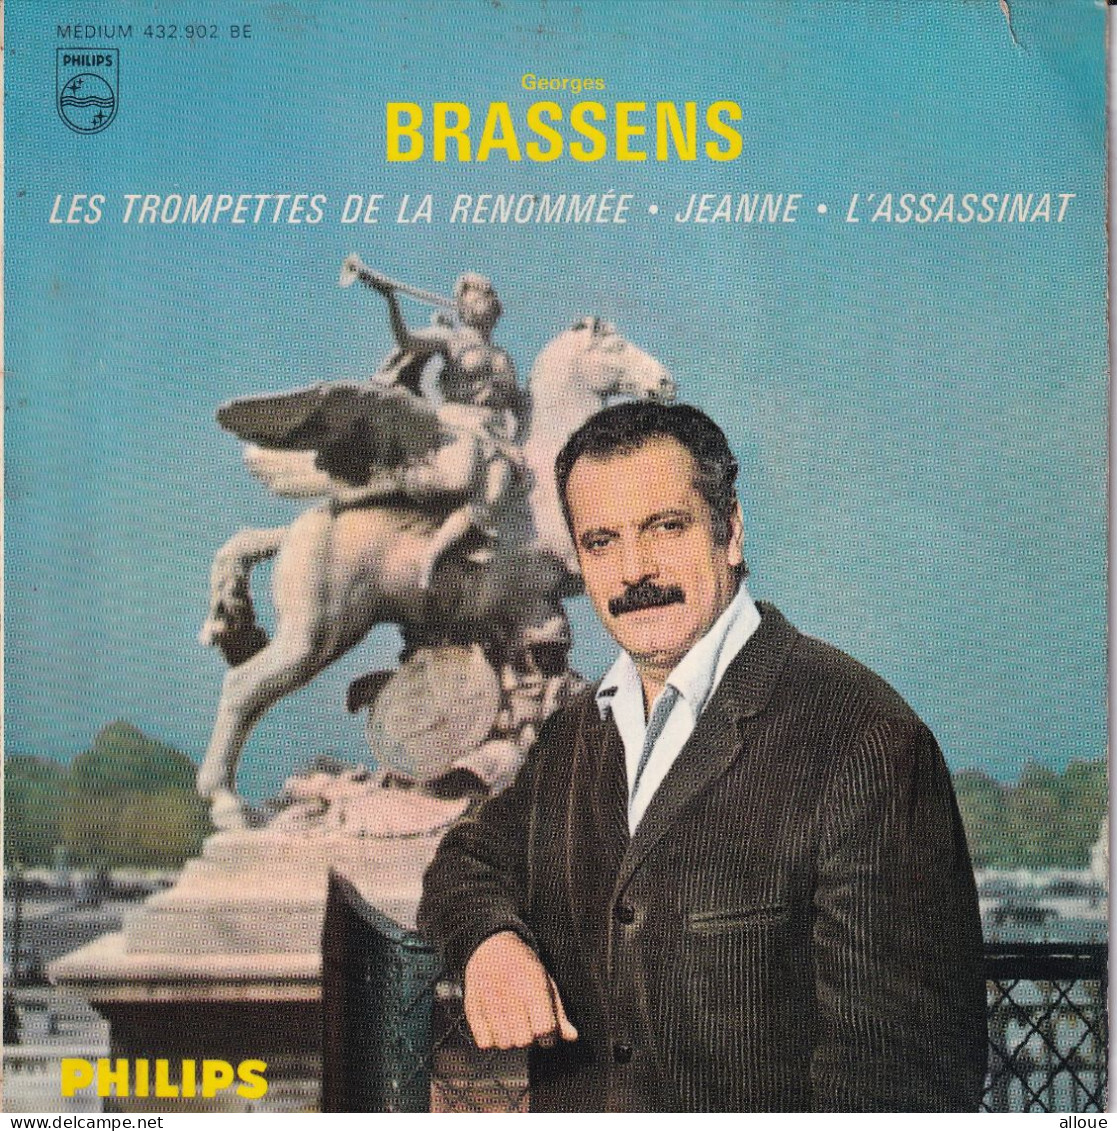 GEORGES BRASSENS - FR EP - LES TROMPETTES DE LA RENOMMEE + 3 - Other - French Music